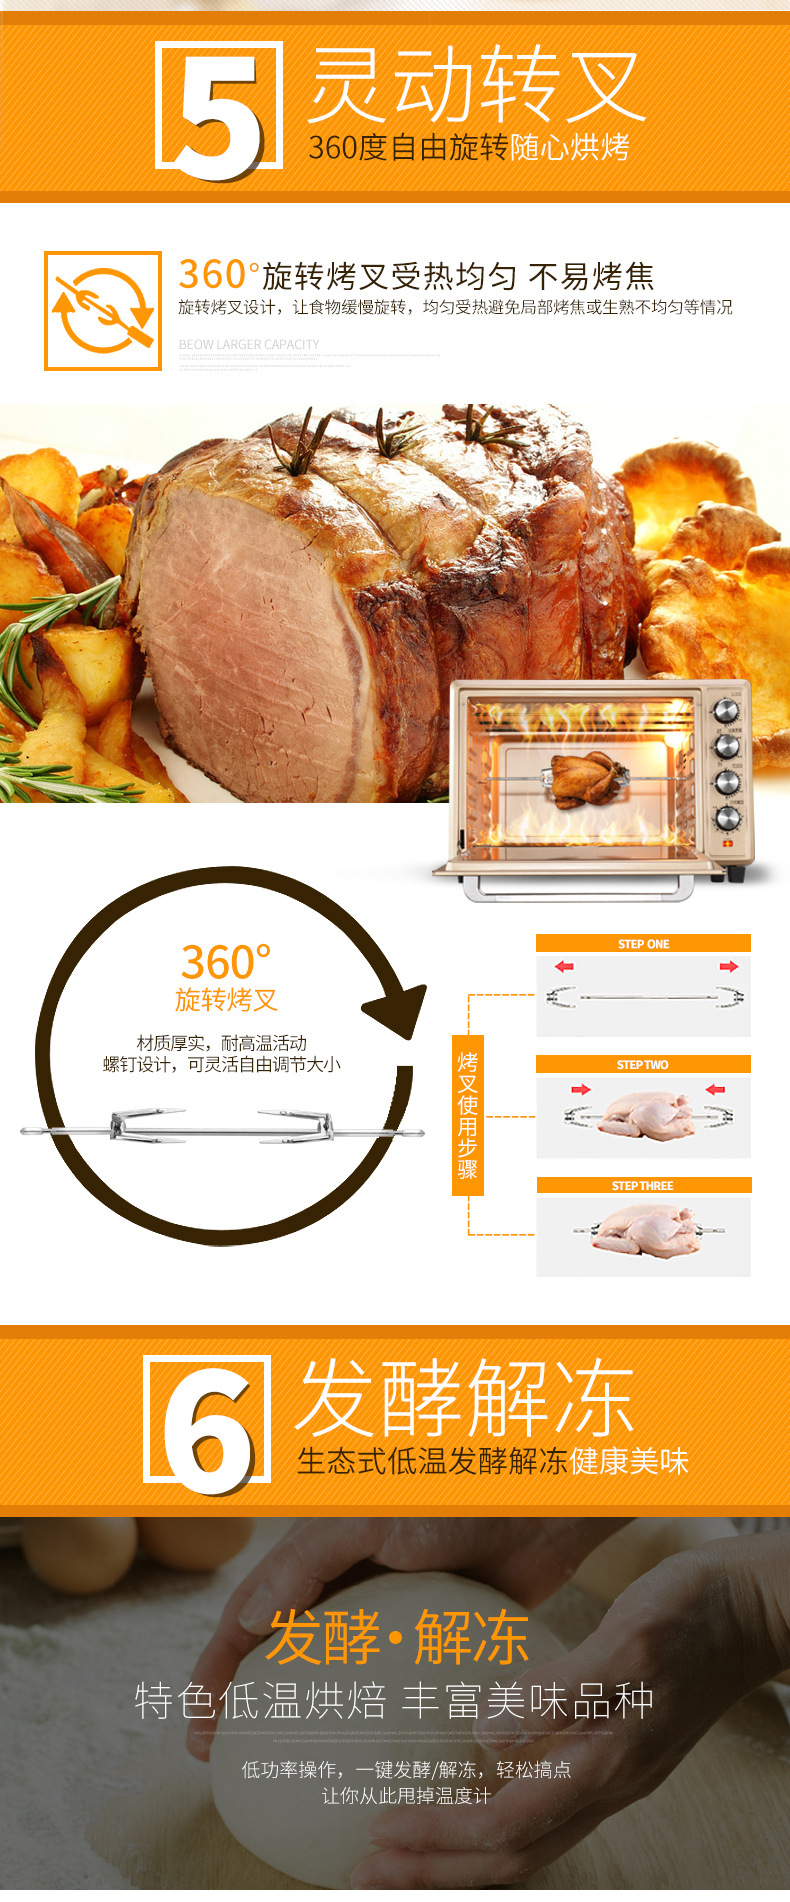 beow/贝奥 BO-K45W电烤箱家用商用多功能大容量蛋糕烘焙烤箱新品